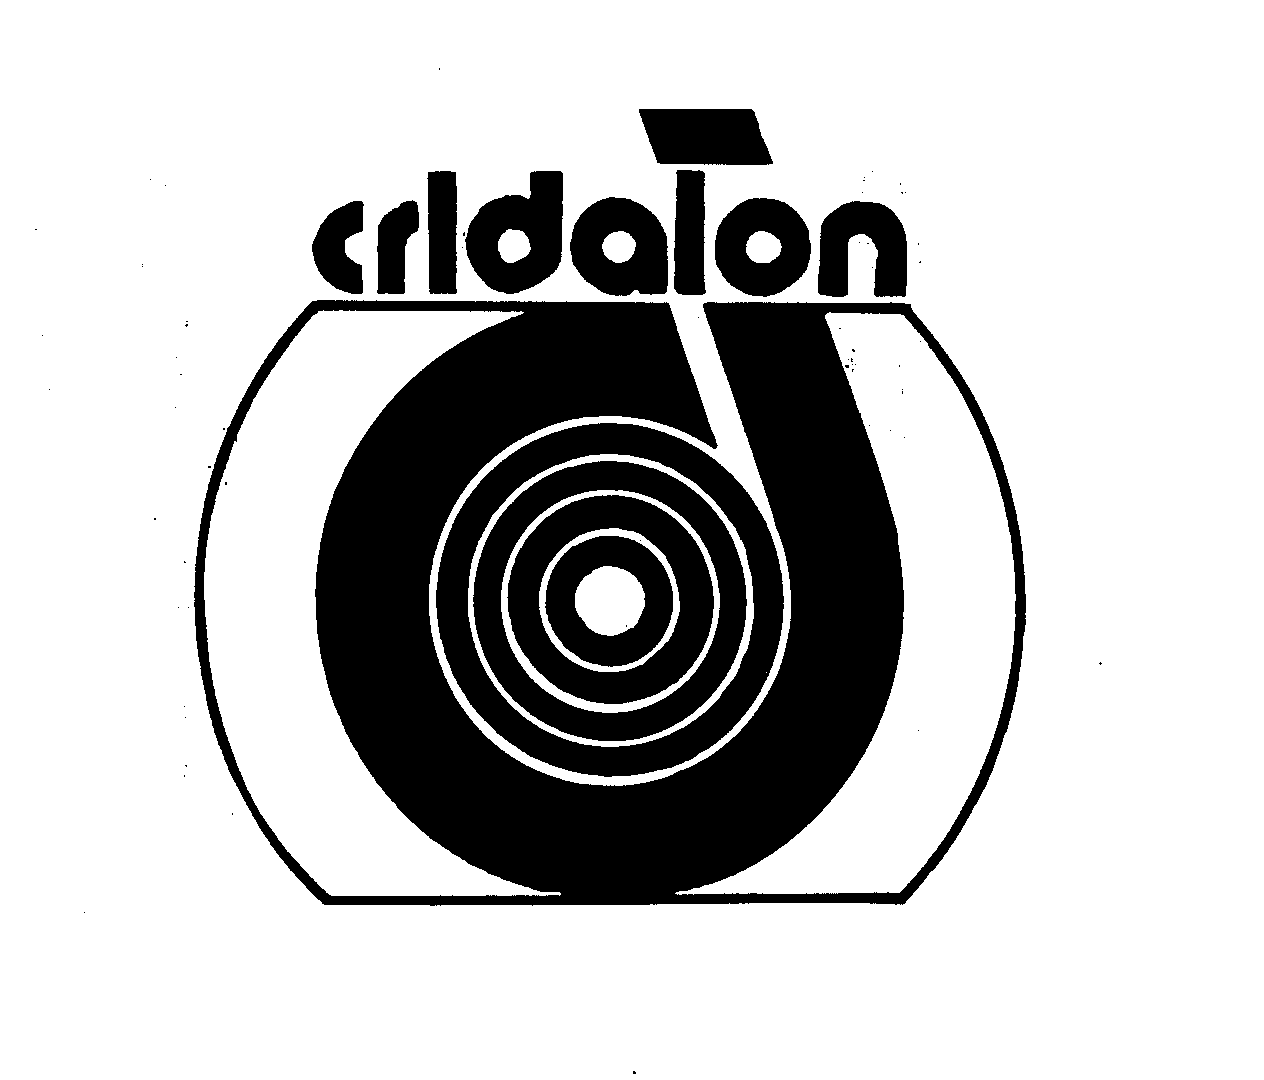  CRIDALON D